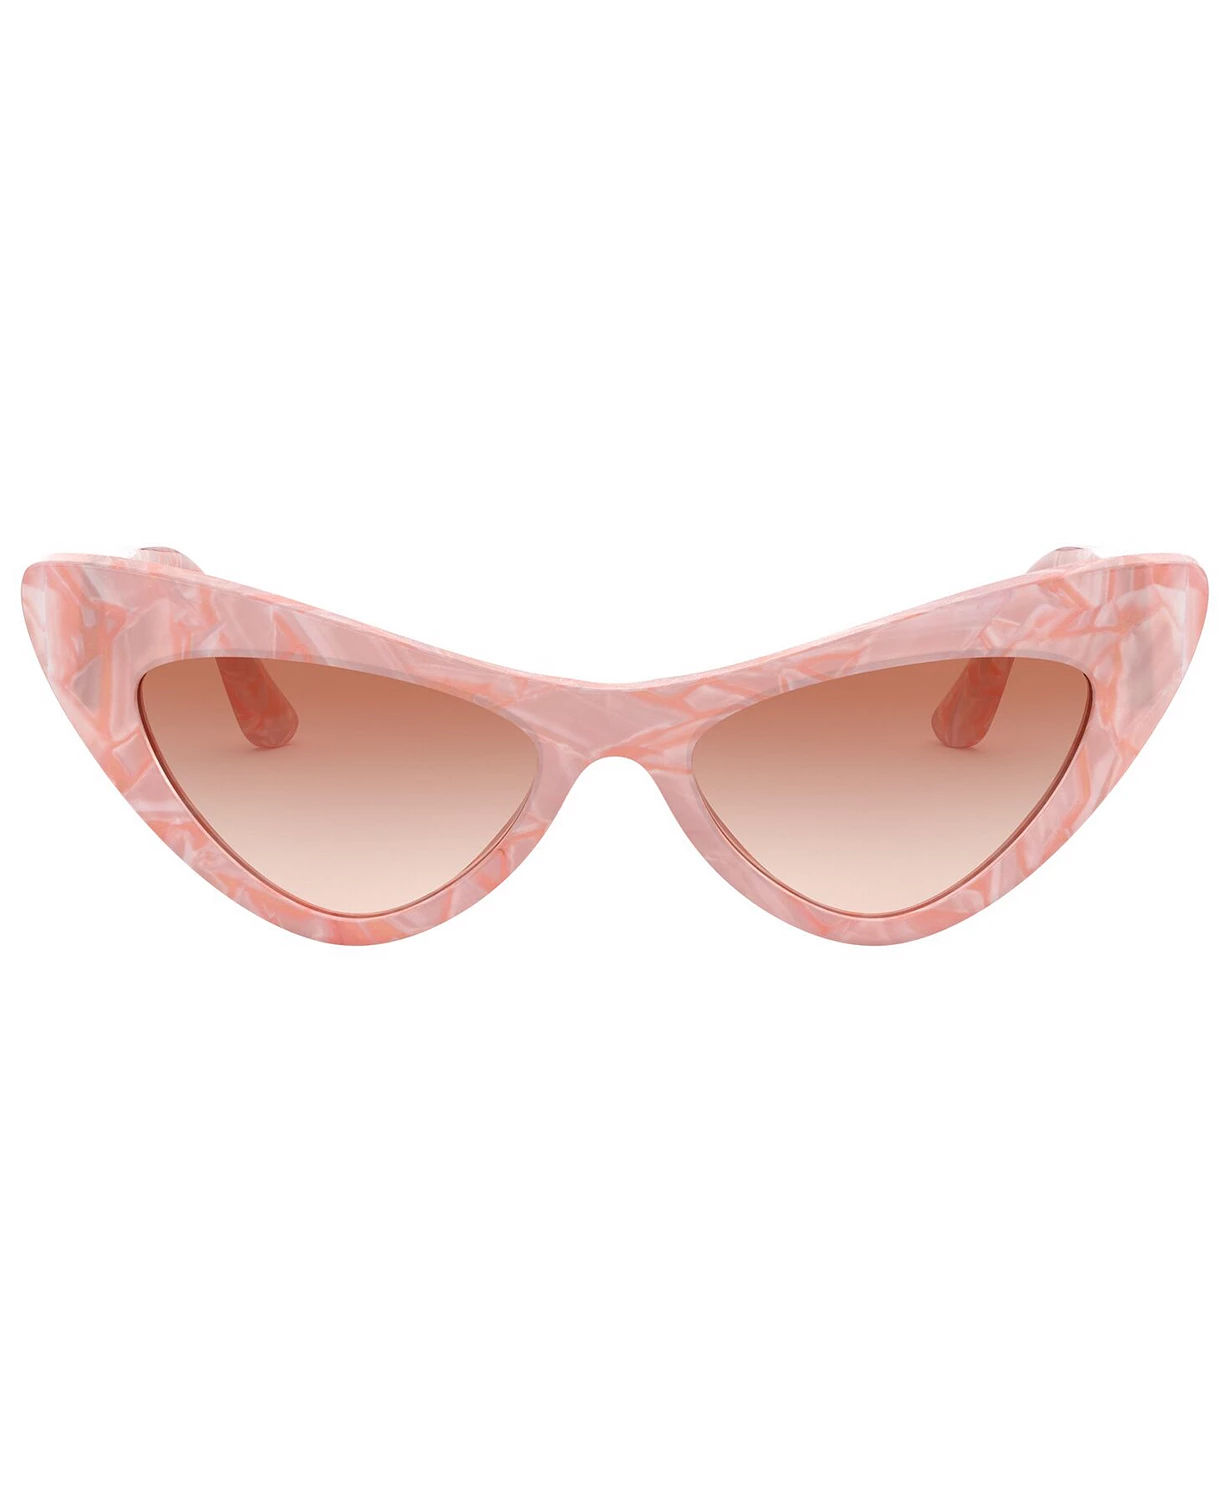 Dolce & Gabbana Madreperla Pink Cat Eye Sunglasses with Pink Gradient Lenses